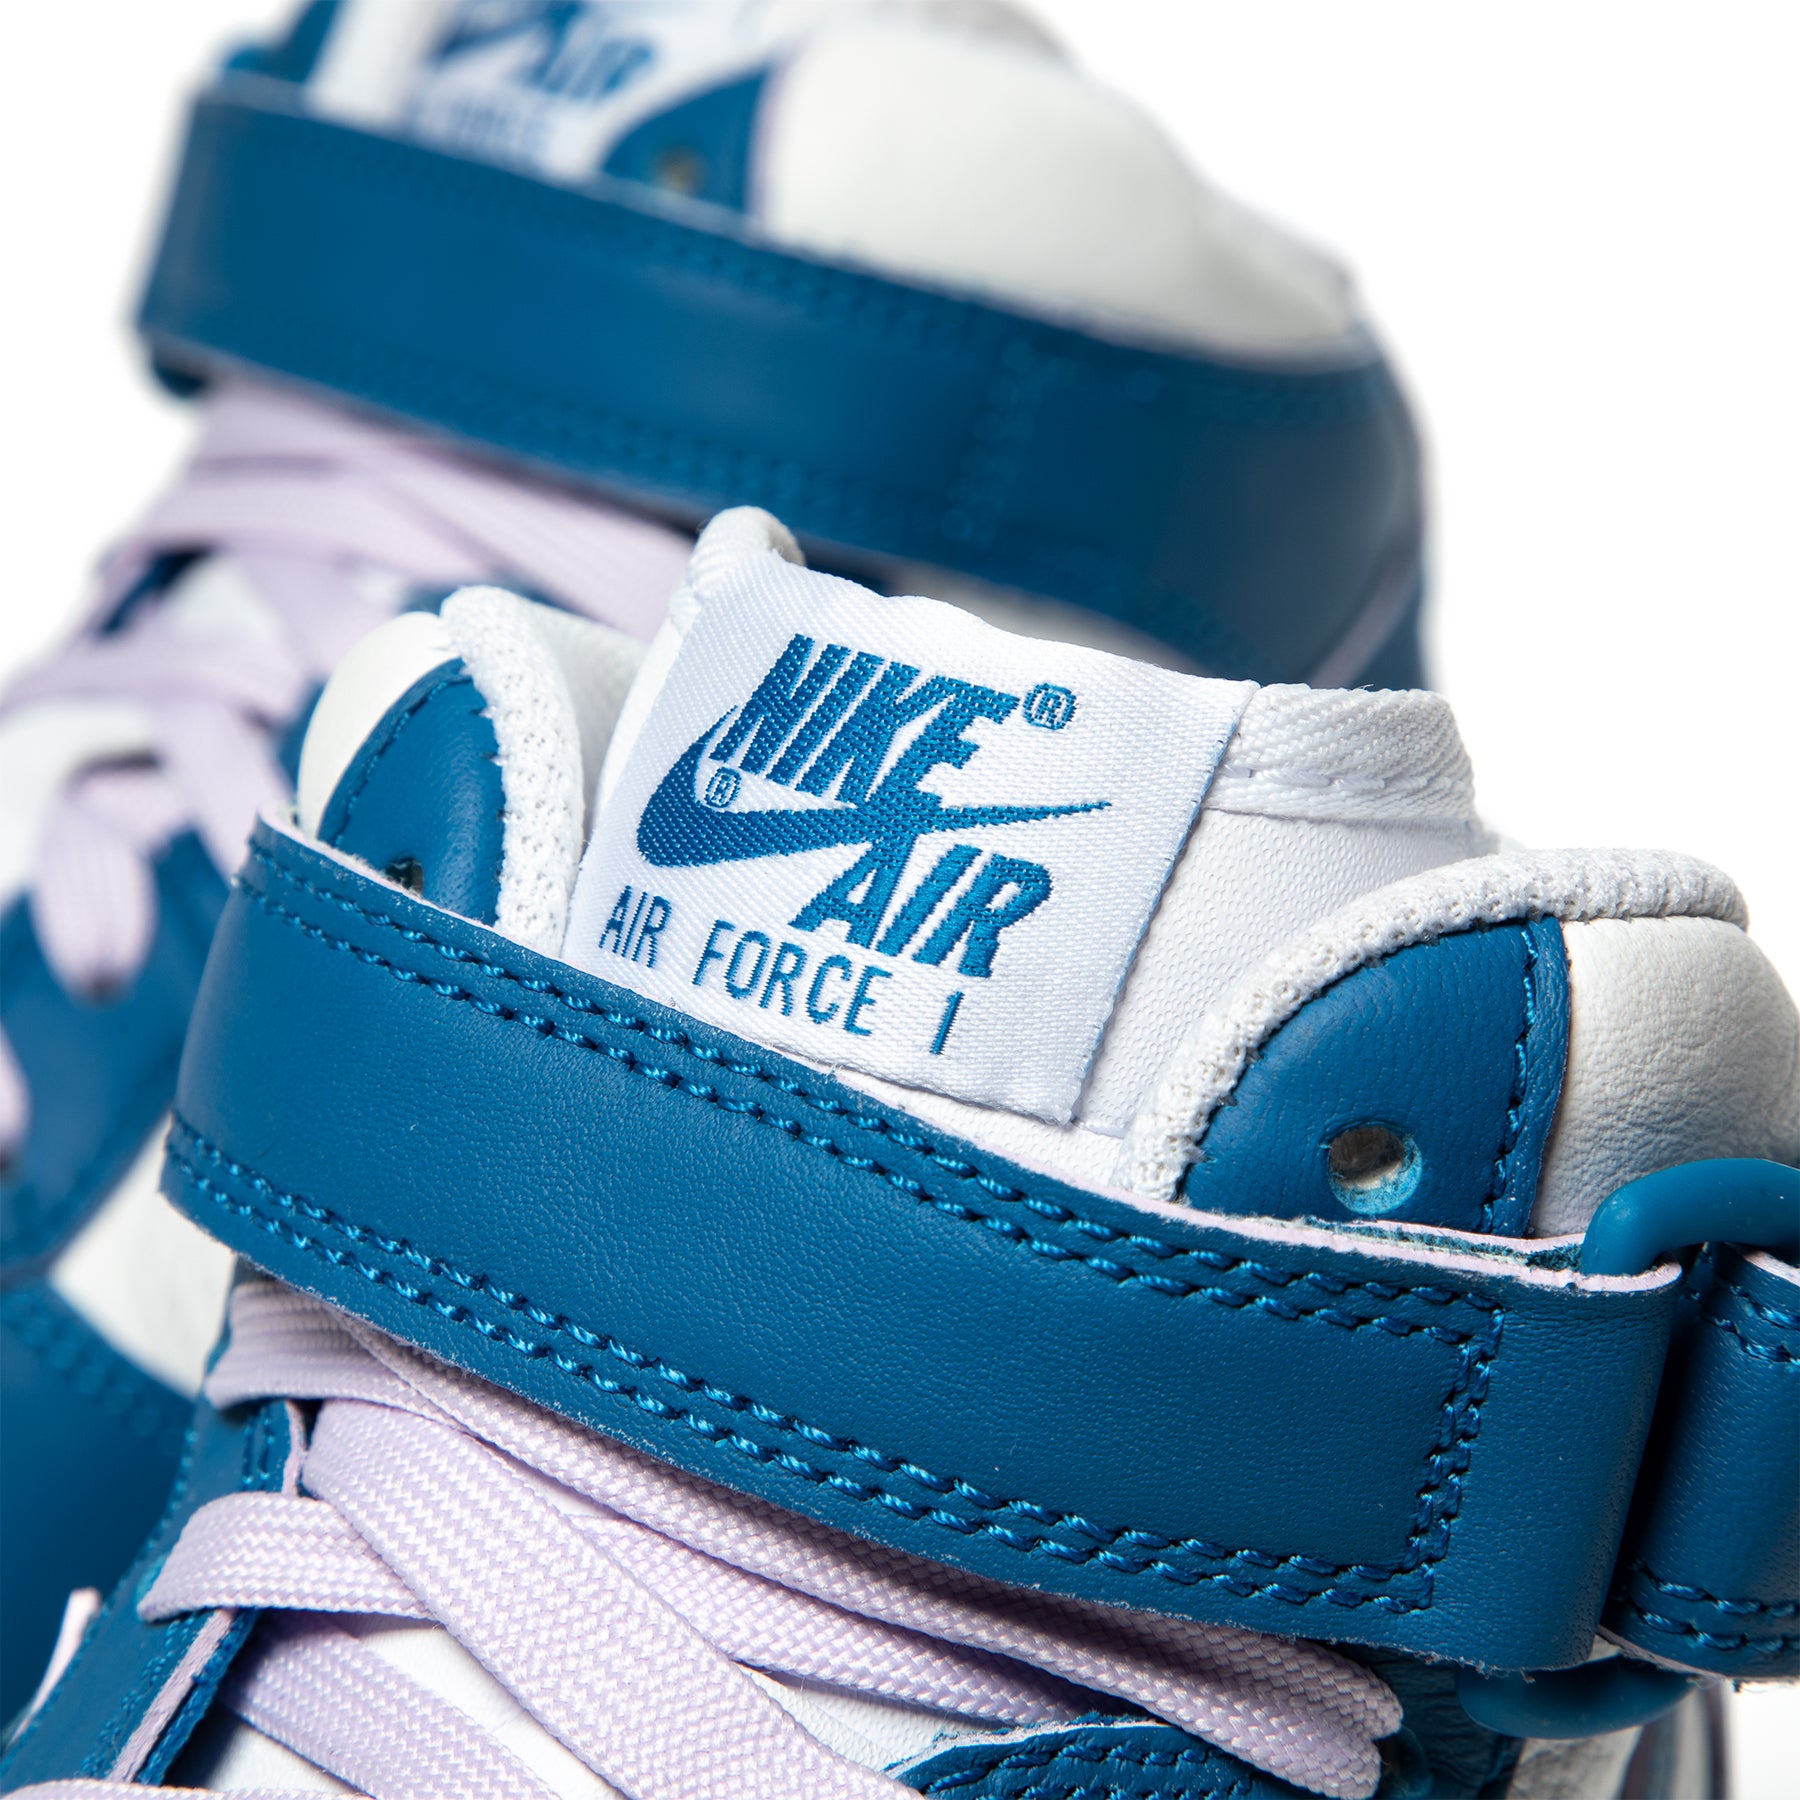 Women's Nike Air Force 1 '07 - White/Blue Sneaker